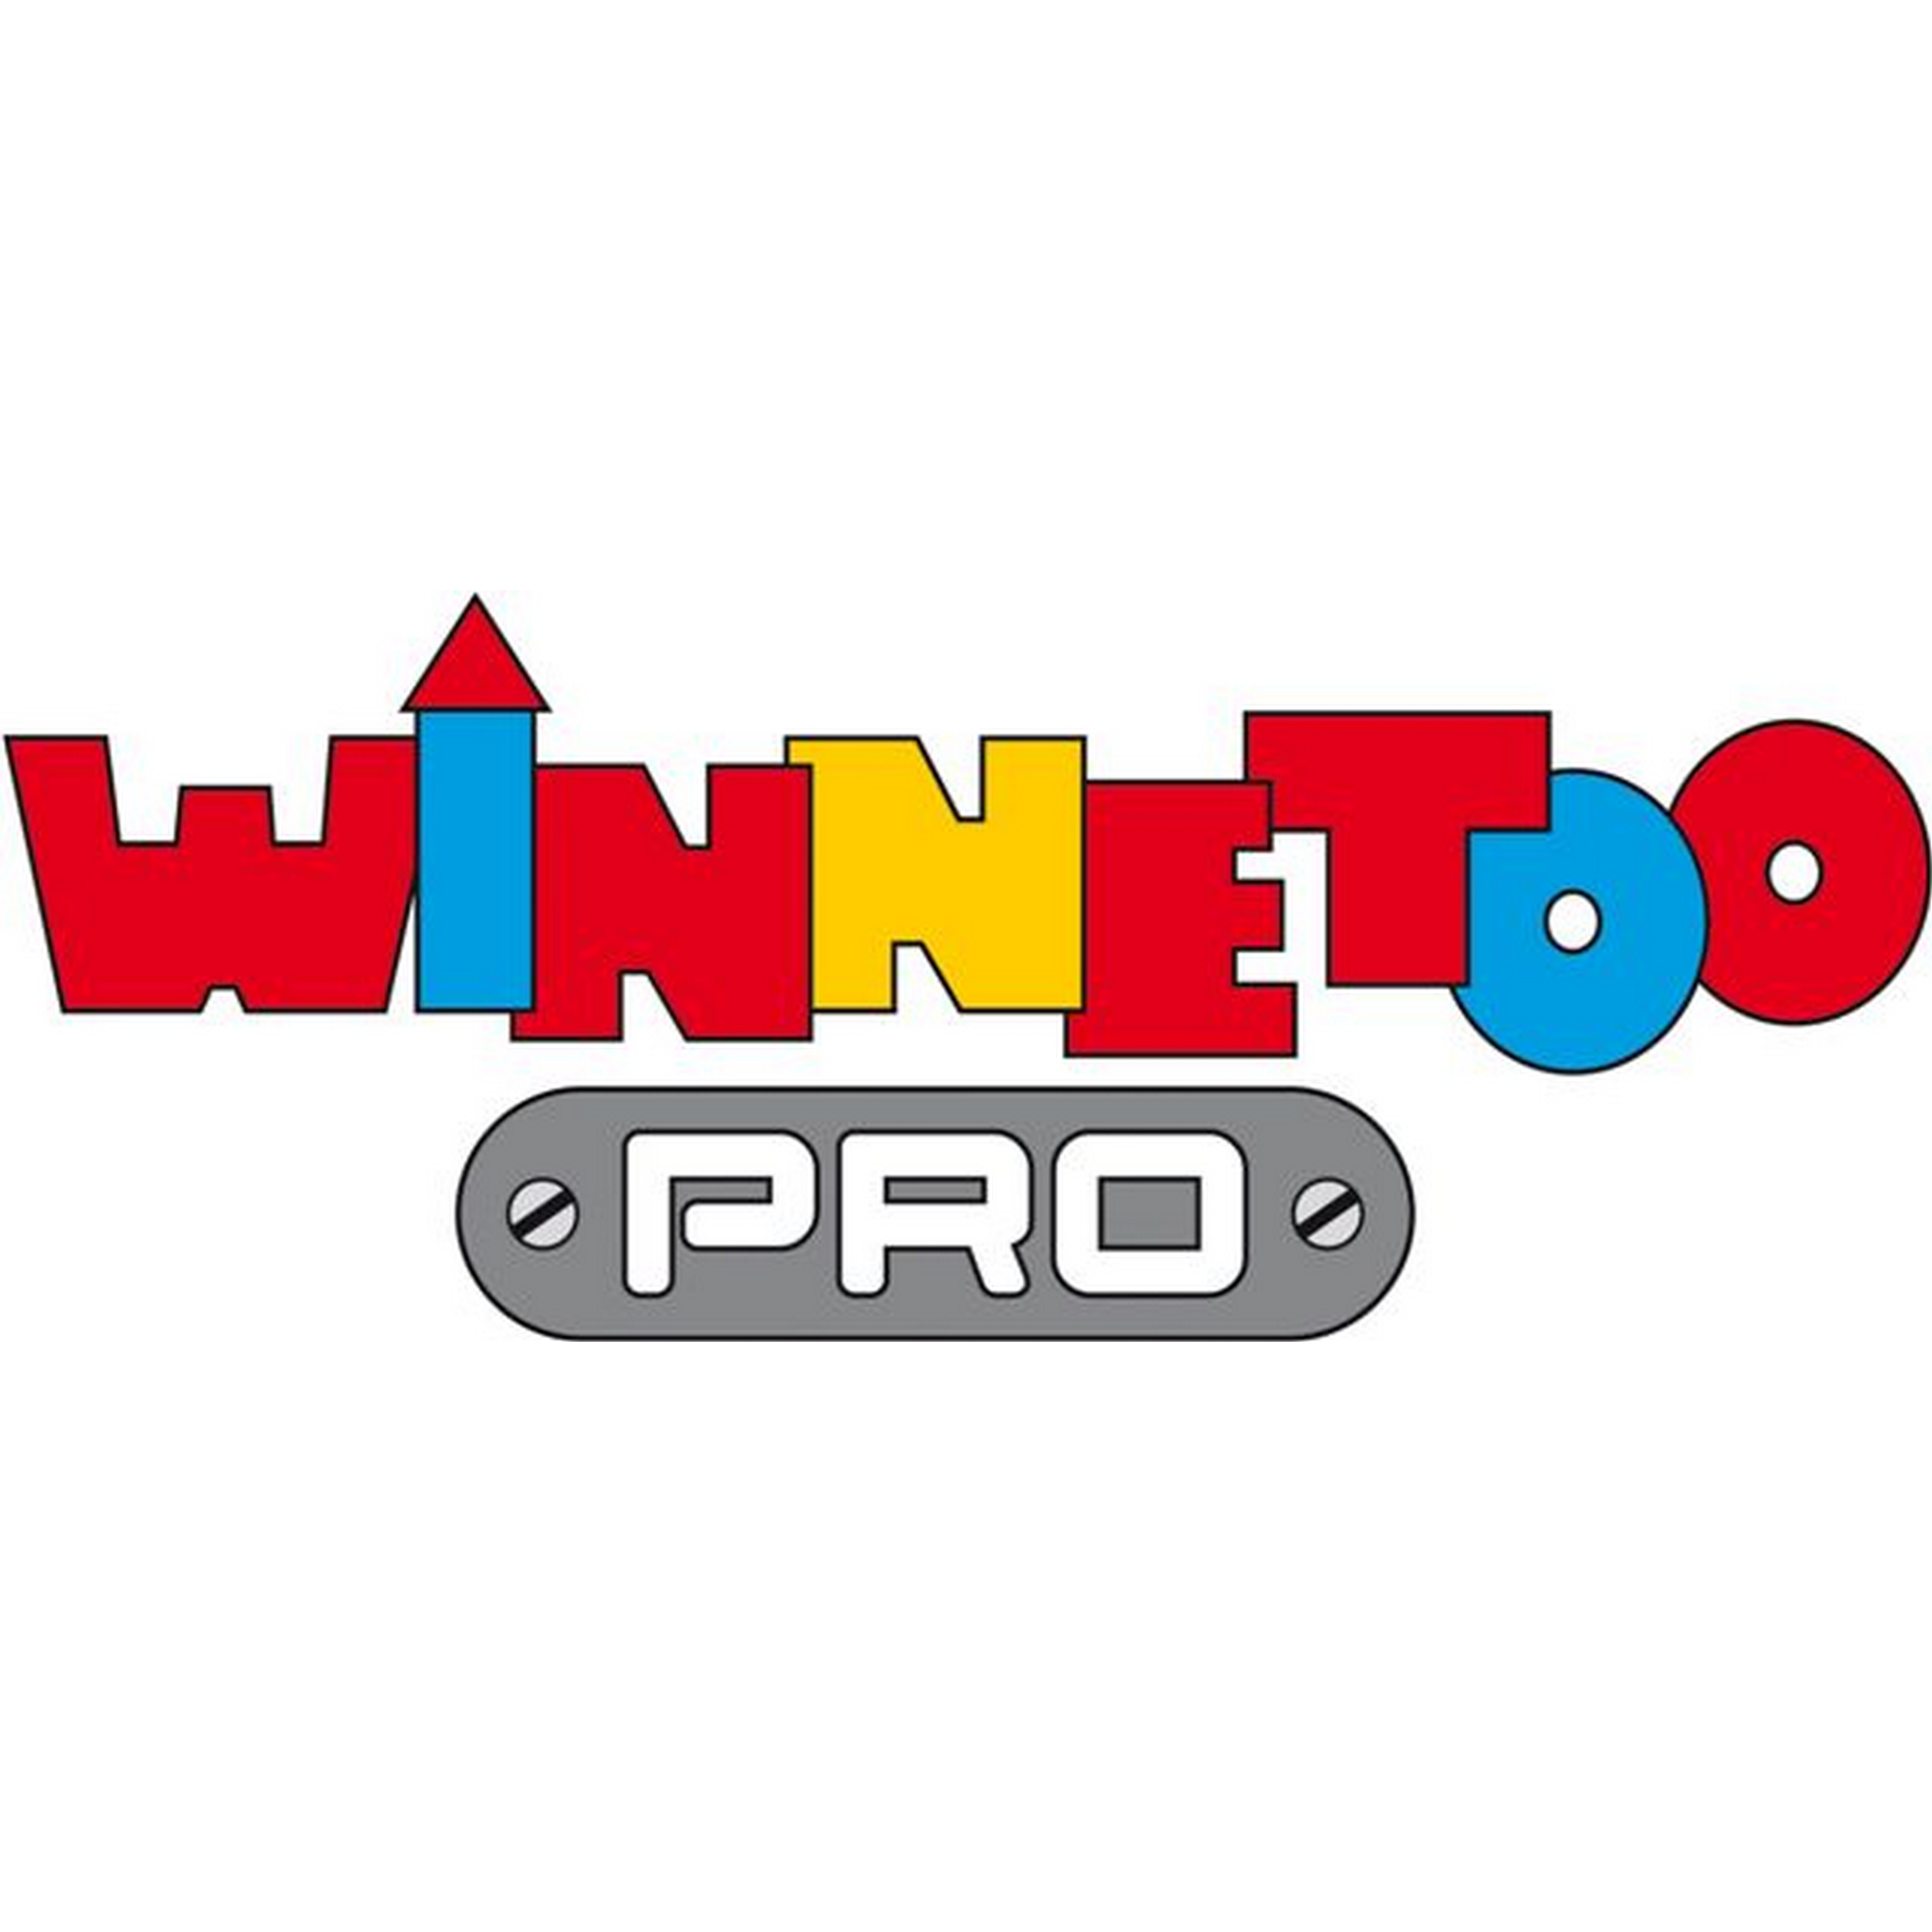 Aussteifungswand 'Winnetoo Pro' 118 x 140 x 2 cm, für Turm + product picture